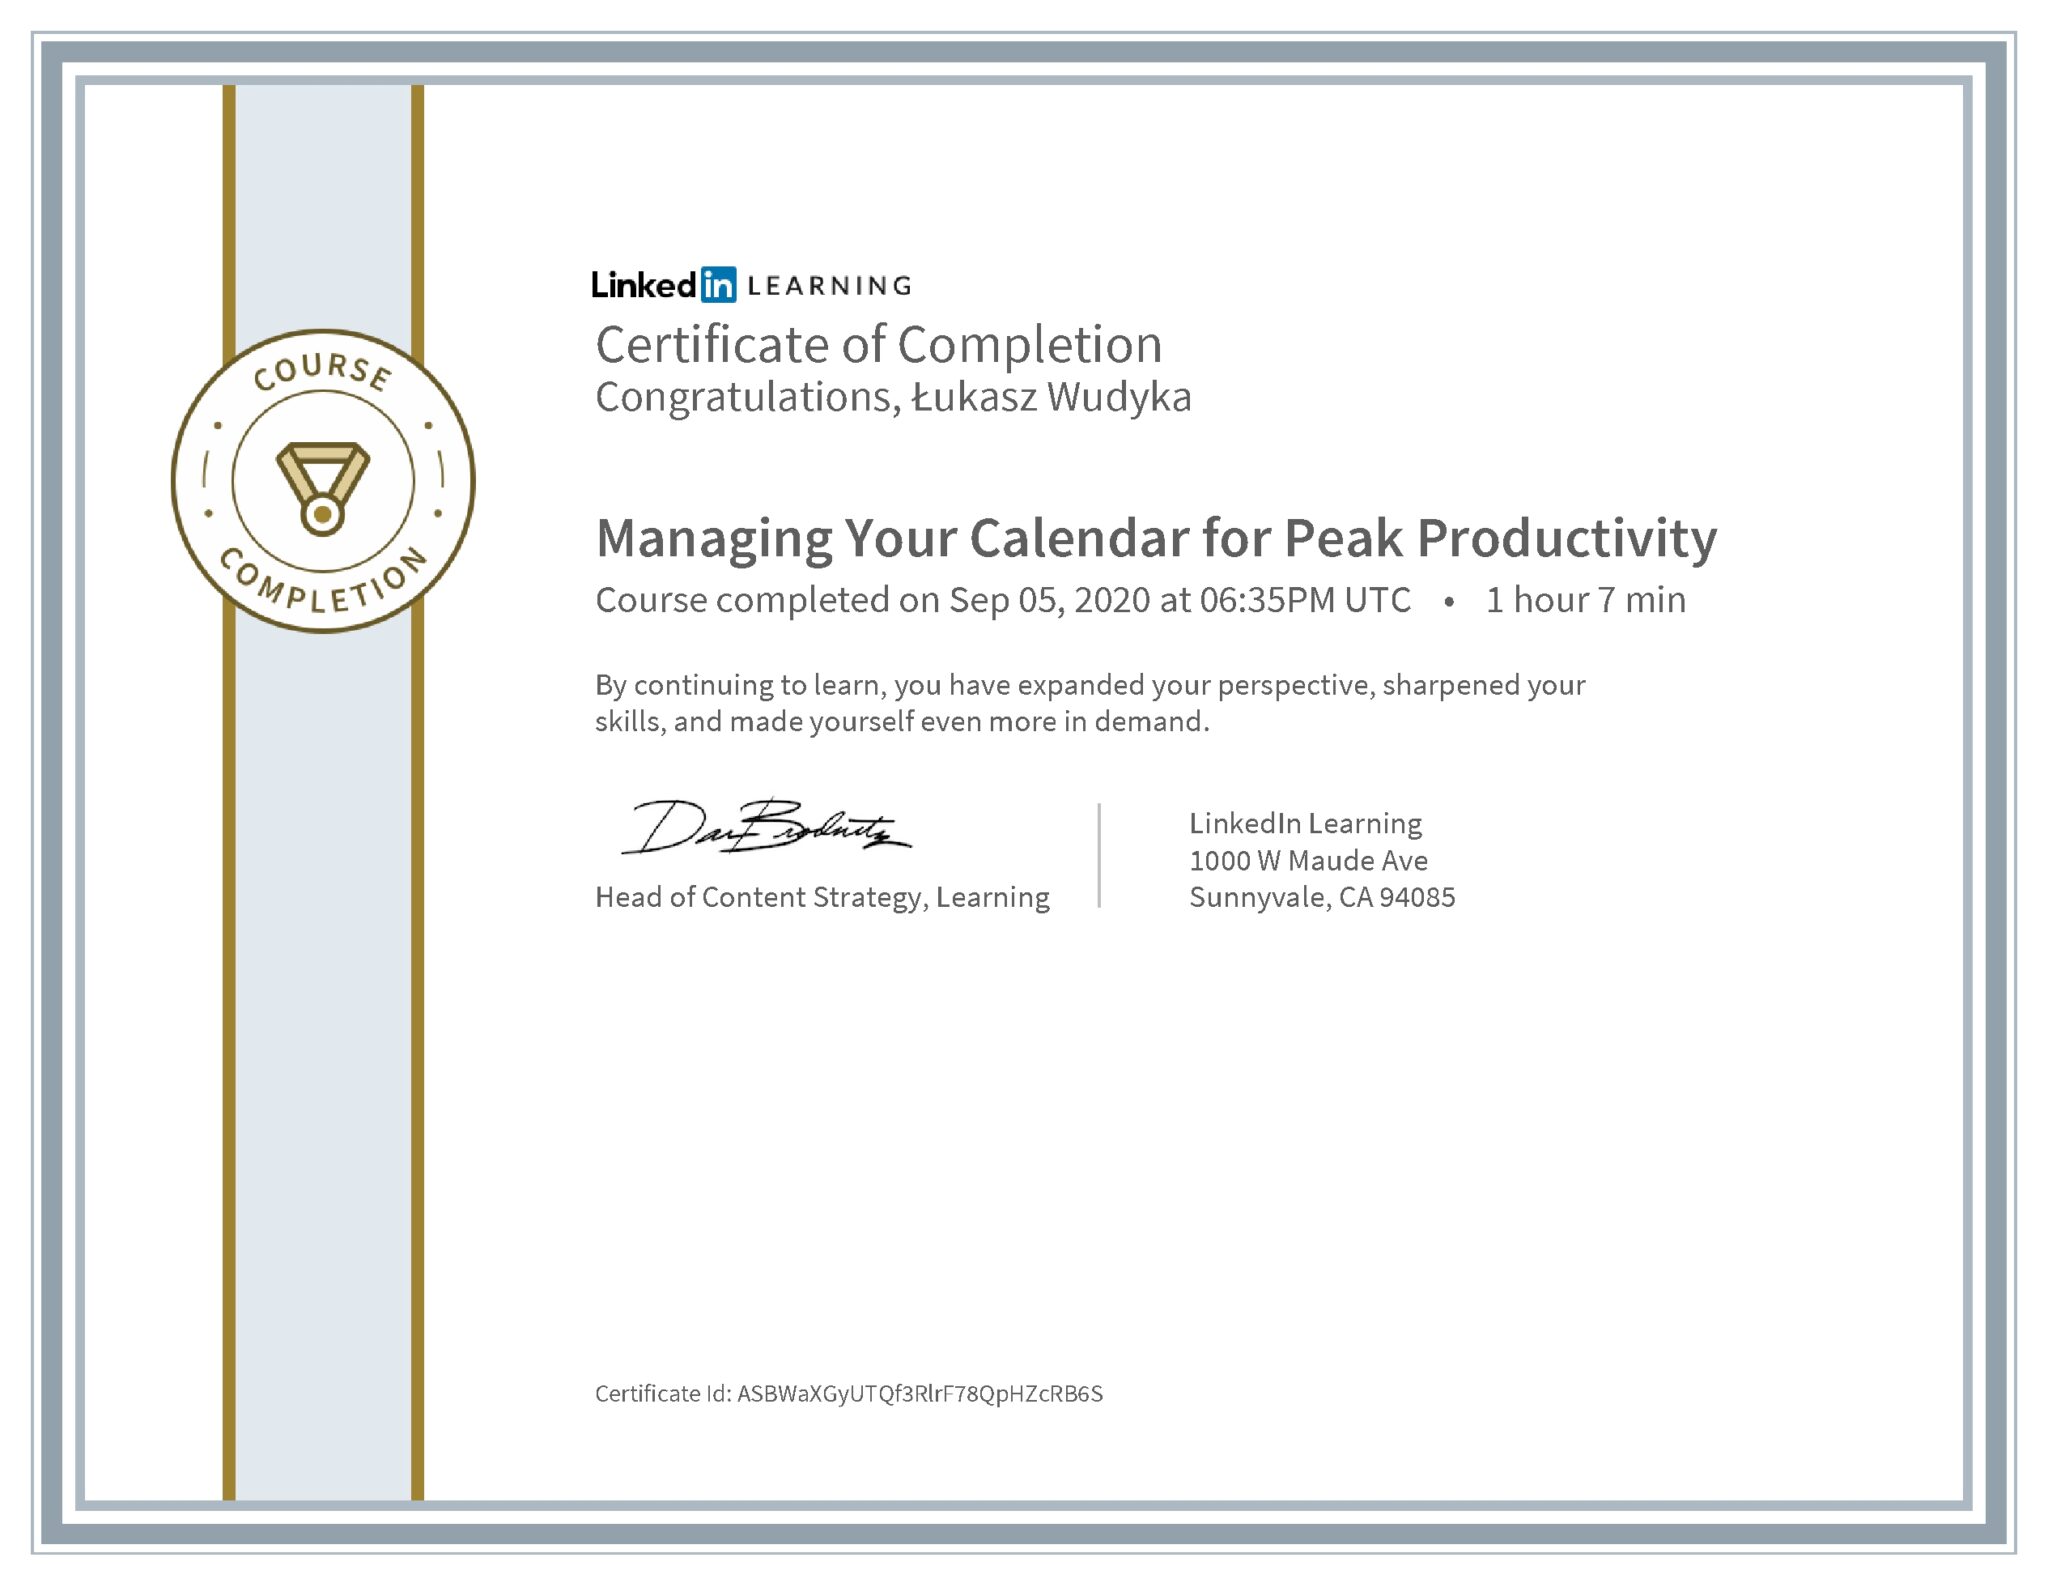 Łukasz Wudyka certyfikat LinkedIn Managing Your Calendar for Peak Productivity